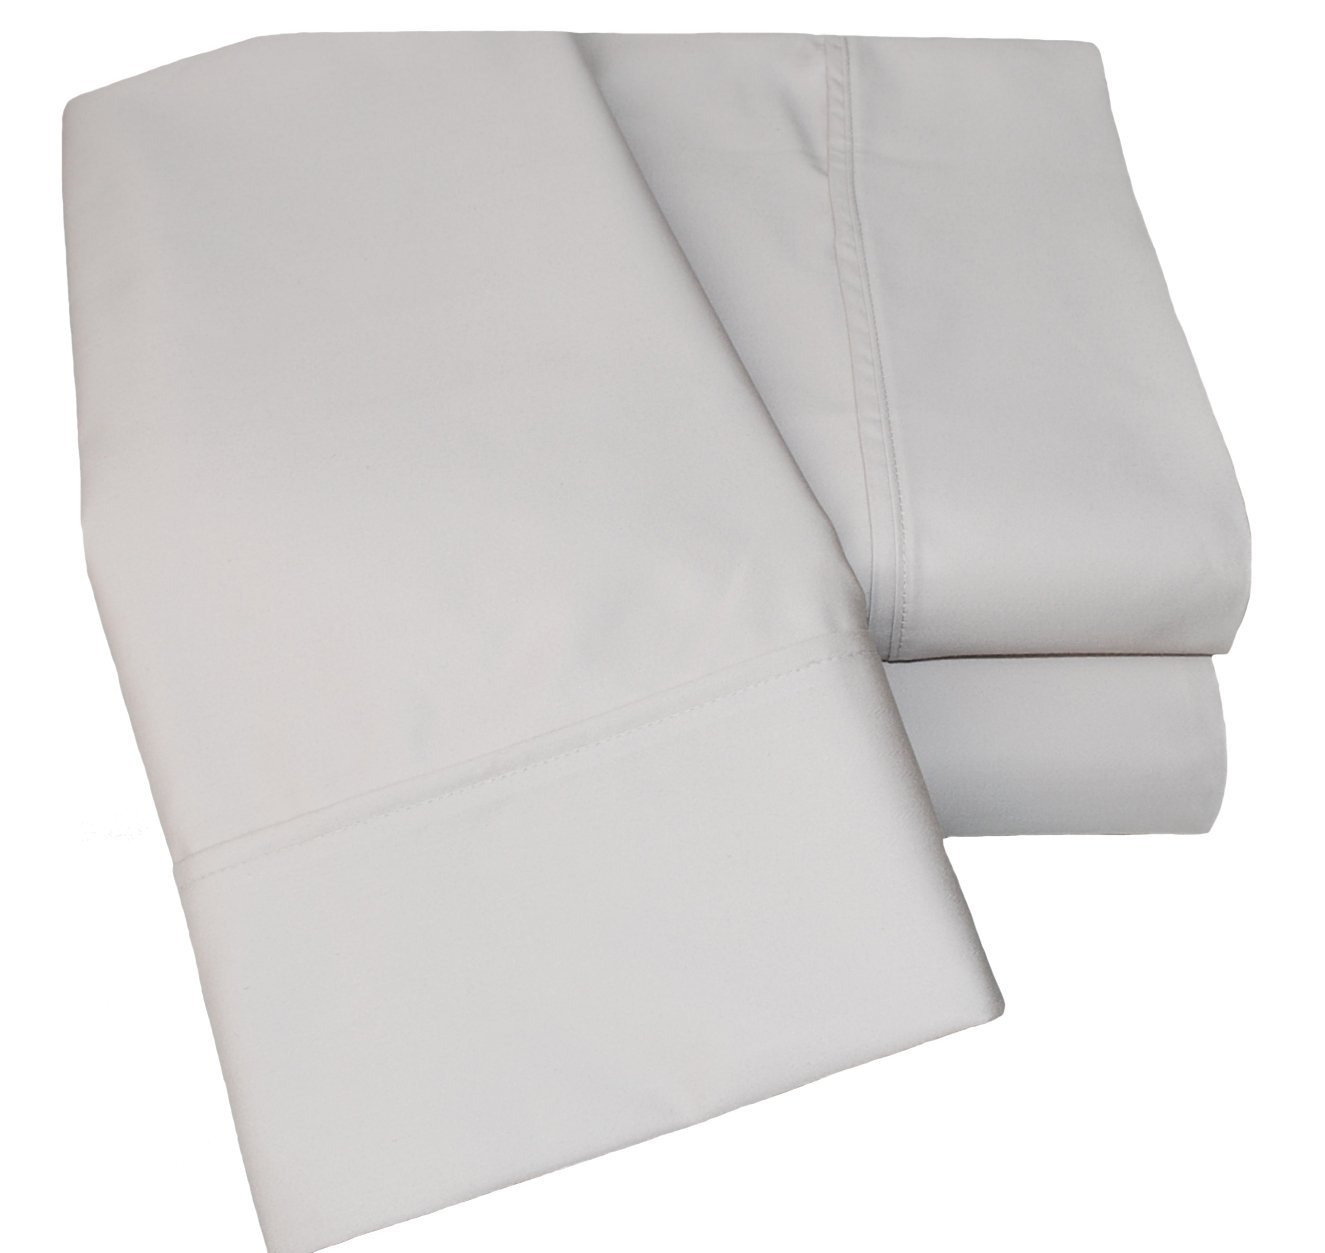 GoLinens 1000 Thread Count Cotton Rich Bed Sheet Sets [ Fitted Sheet + Flat Sheet + Pillowcases ]